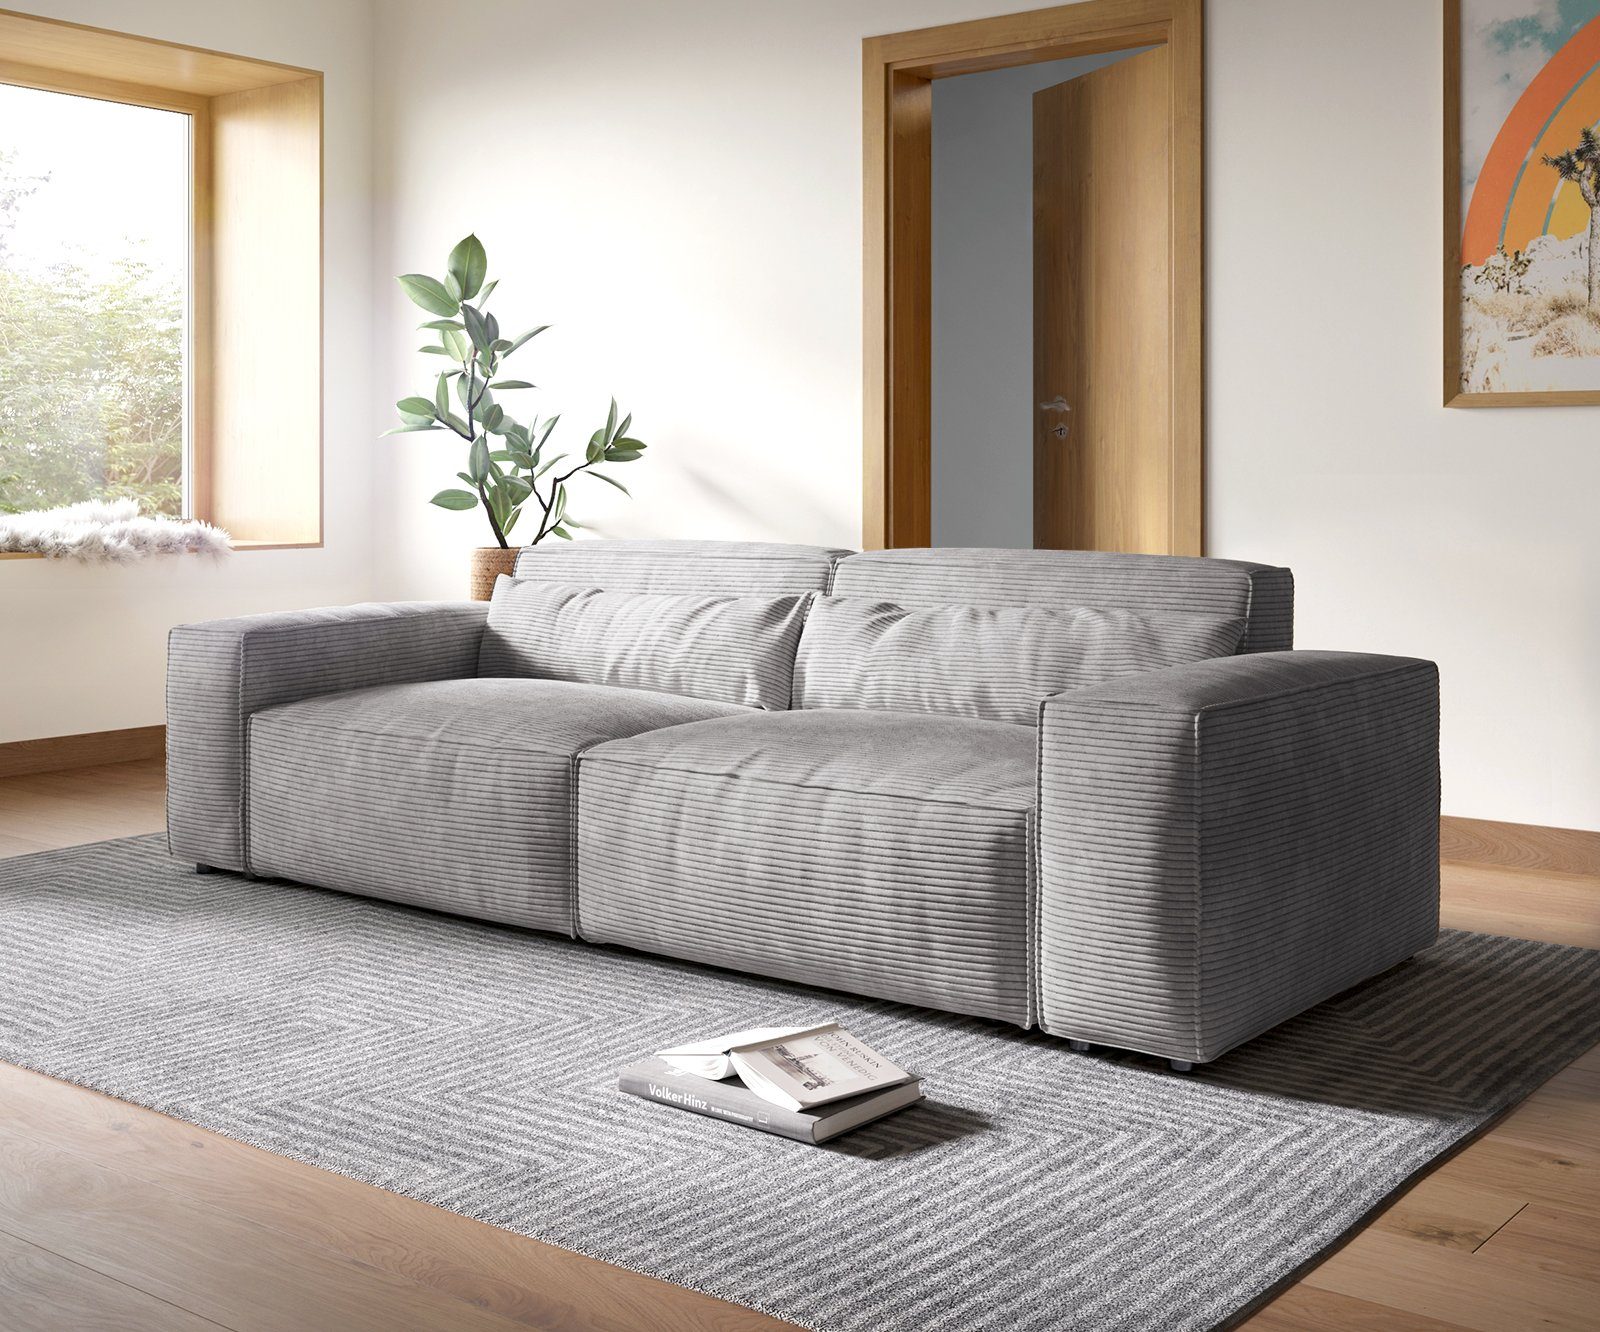 Big-Sofa Khakibraun 270x130 cm XL DELIFE Sirpio, Mikrofaser